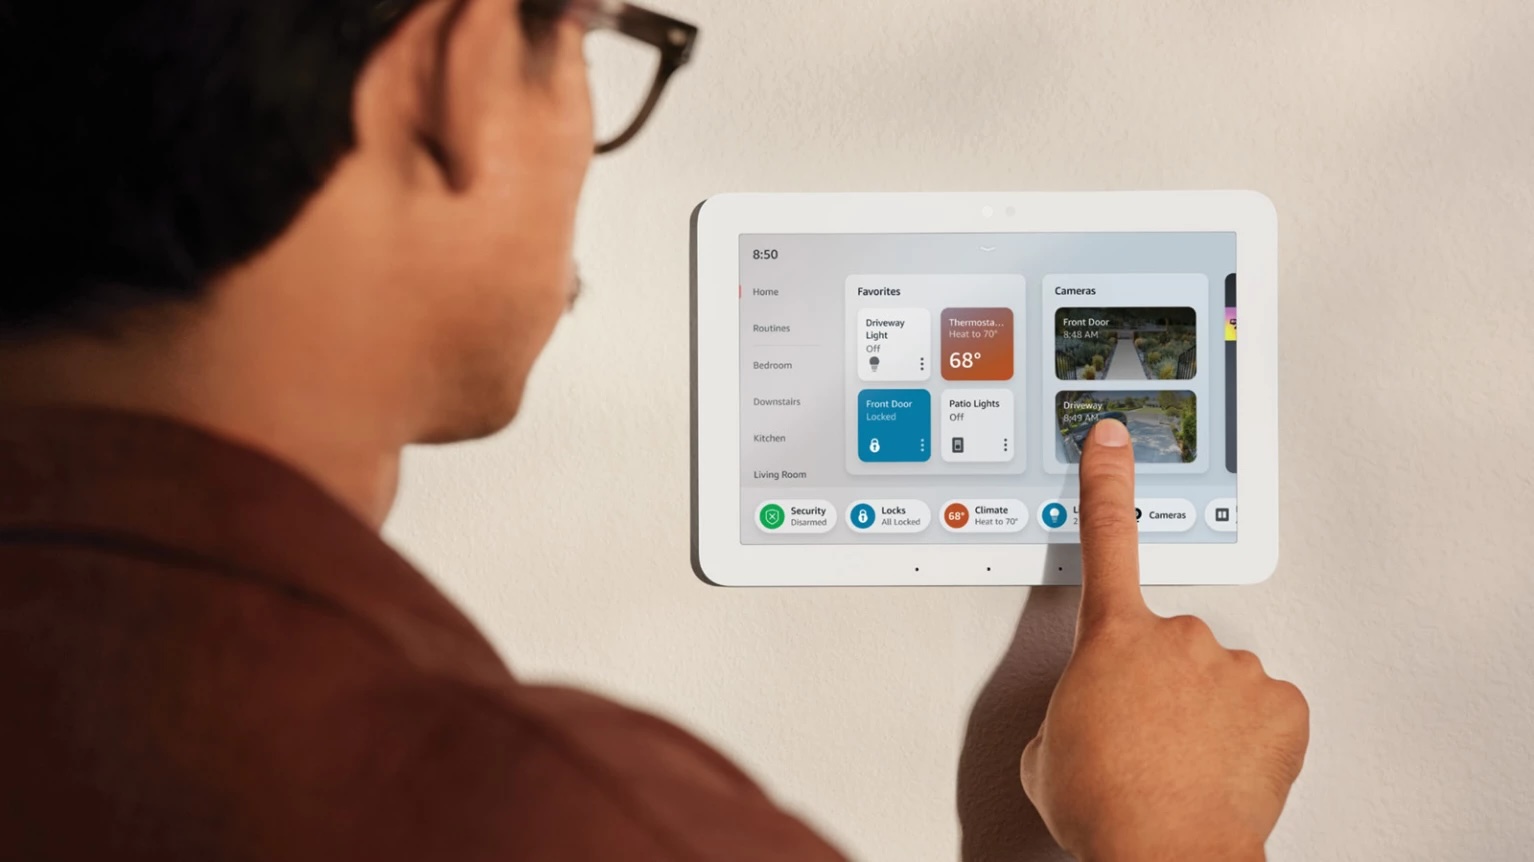 Amazon’s $180 Echo Hub is a wall-mounted smart home control panel